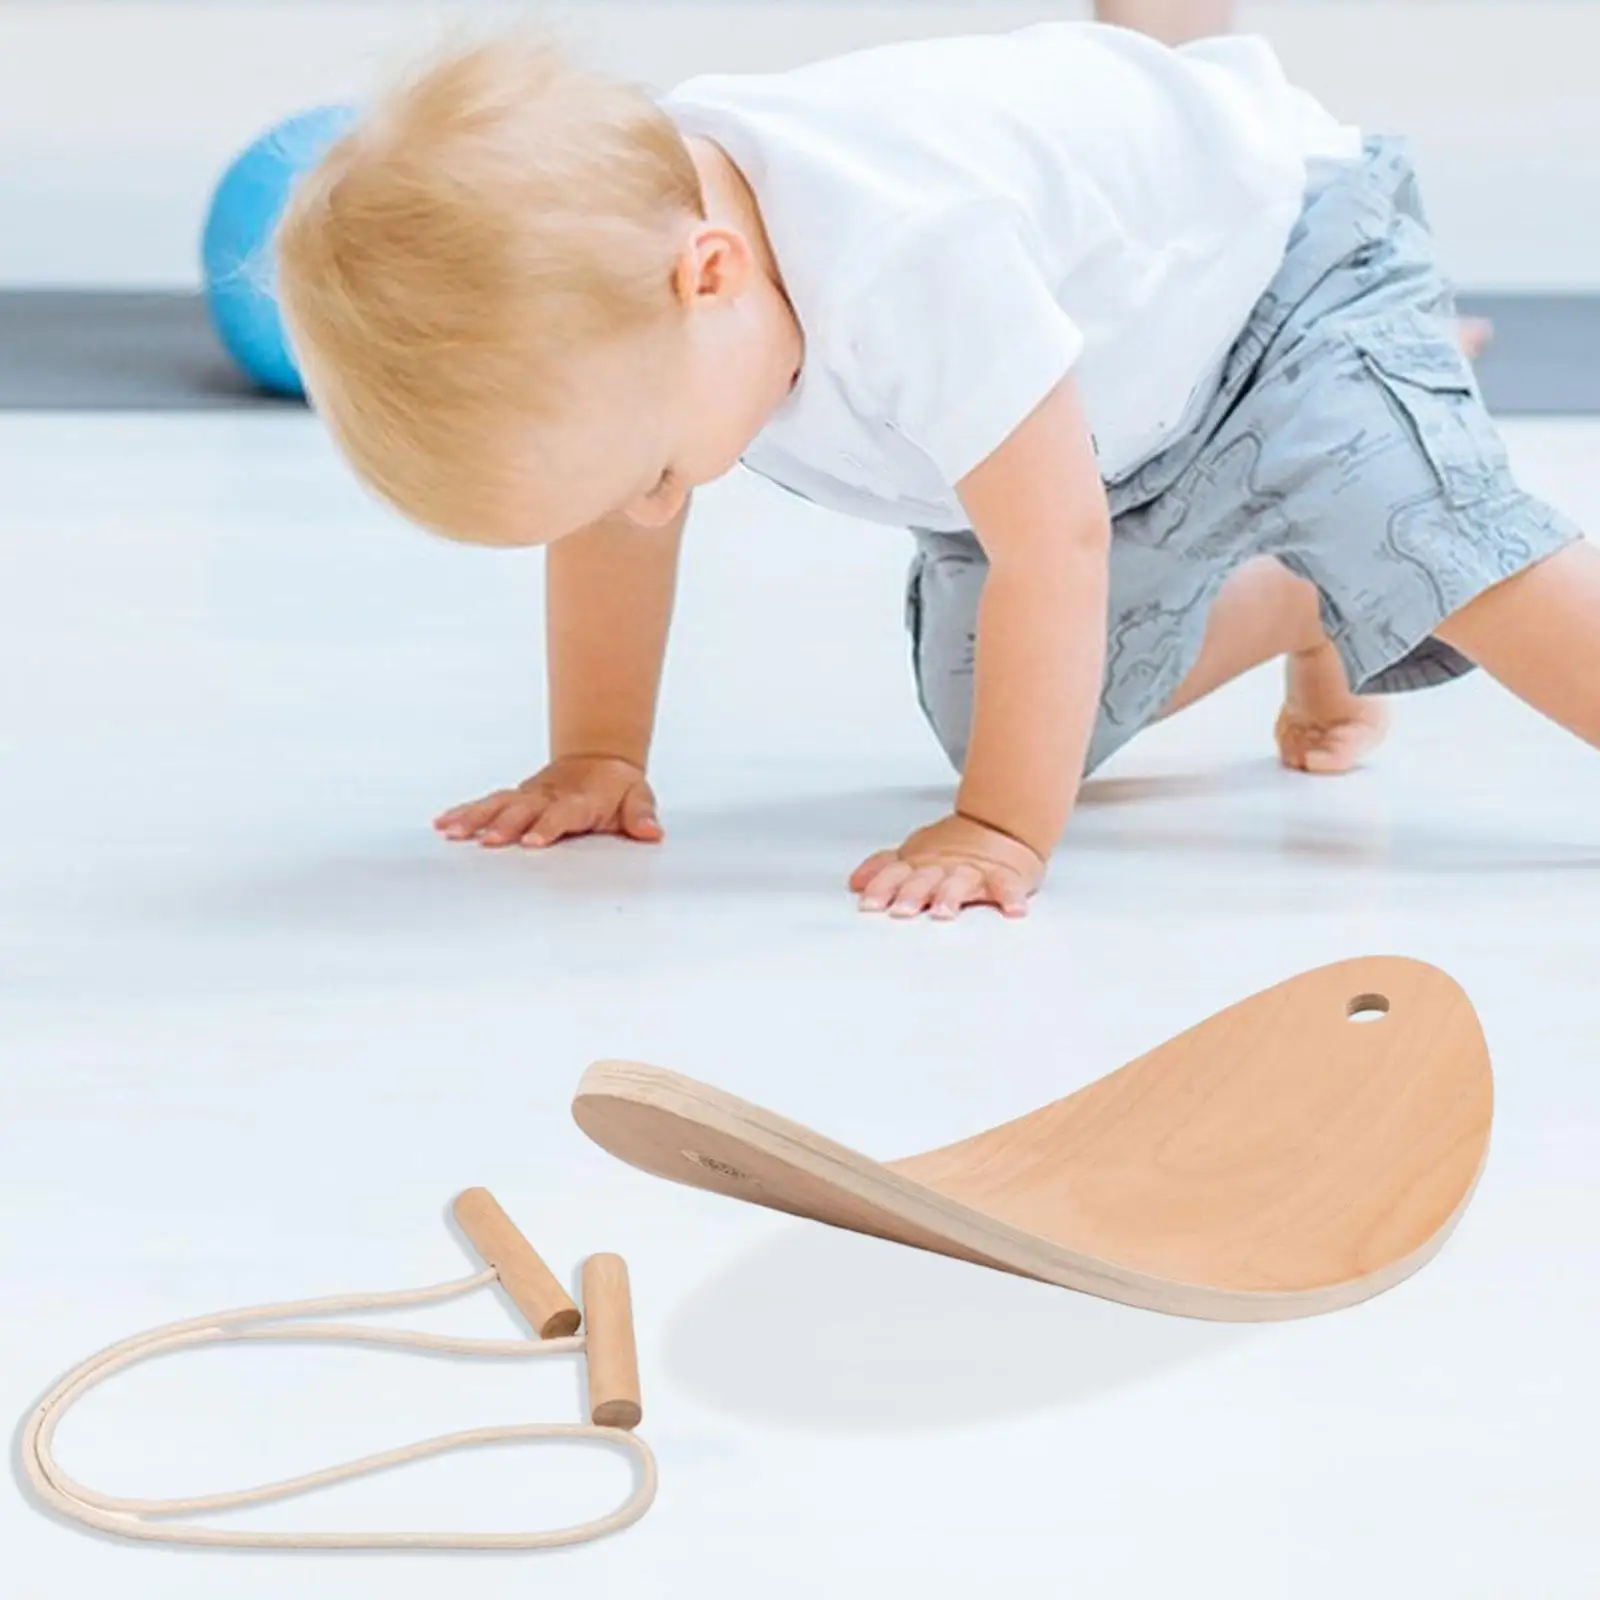 Wobble Balance Board Toddler Toy Montessori Rocker Body Training for Home